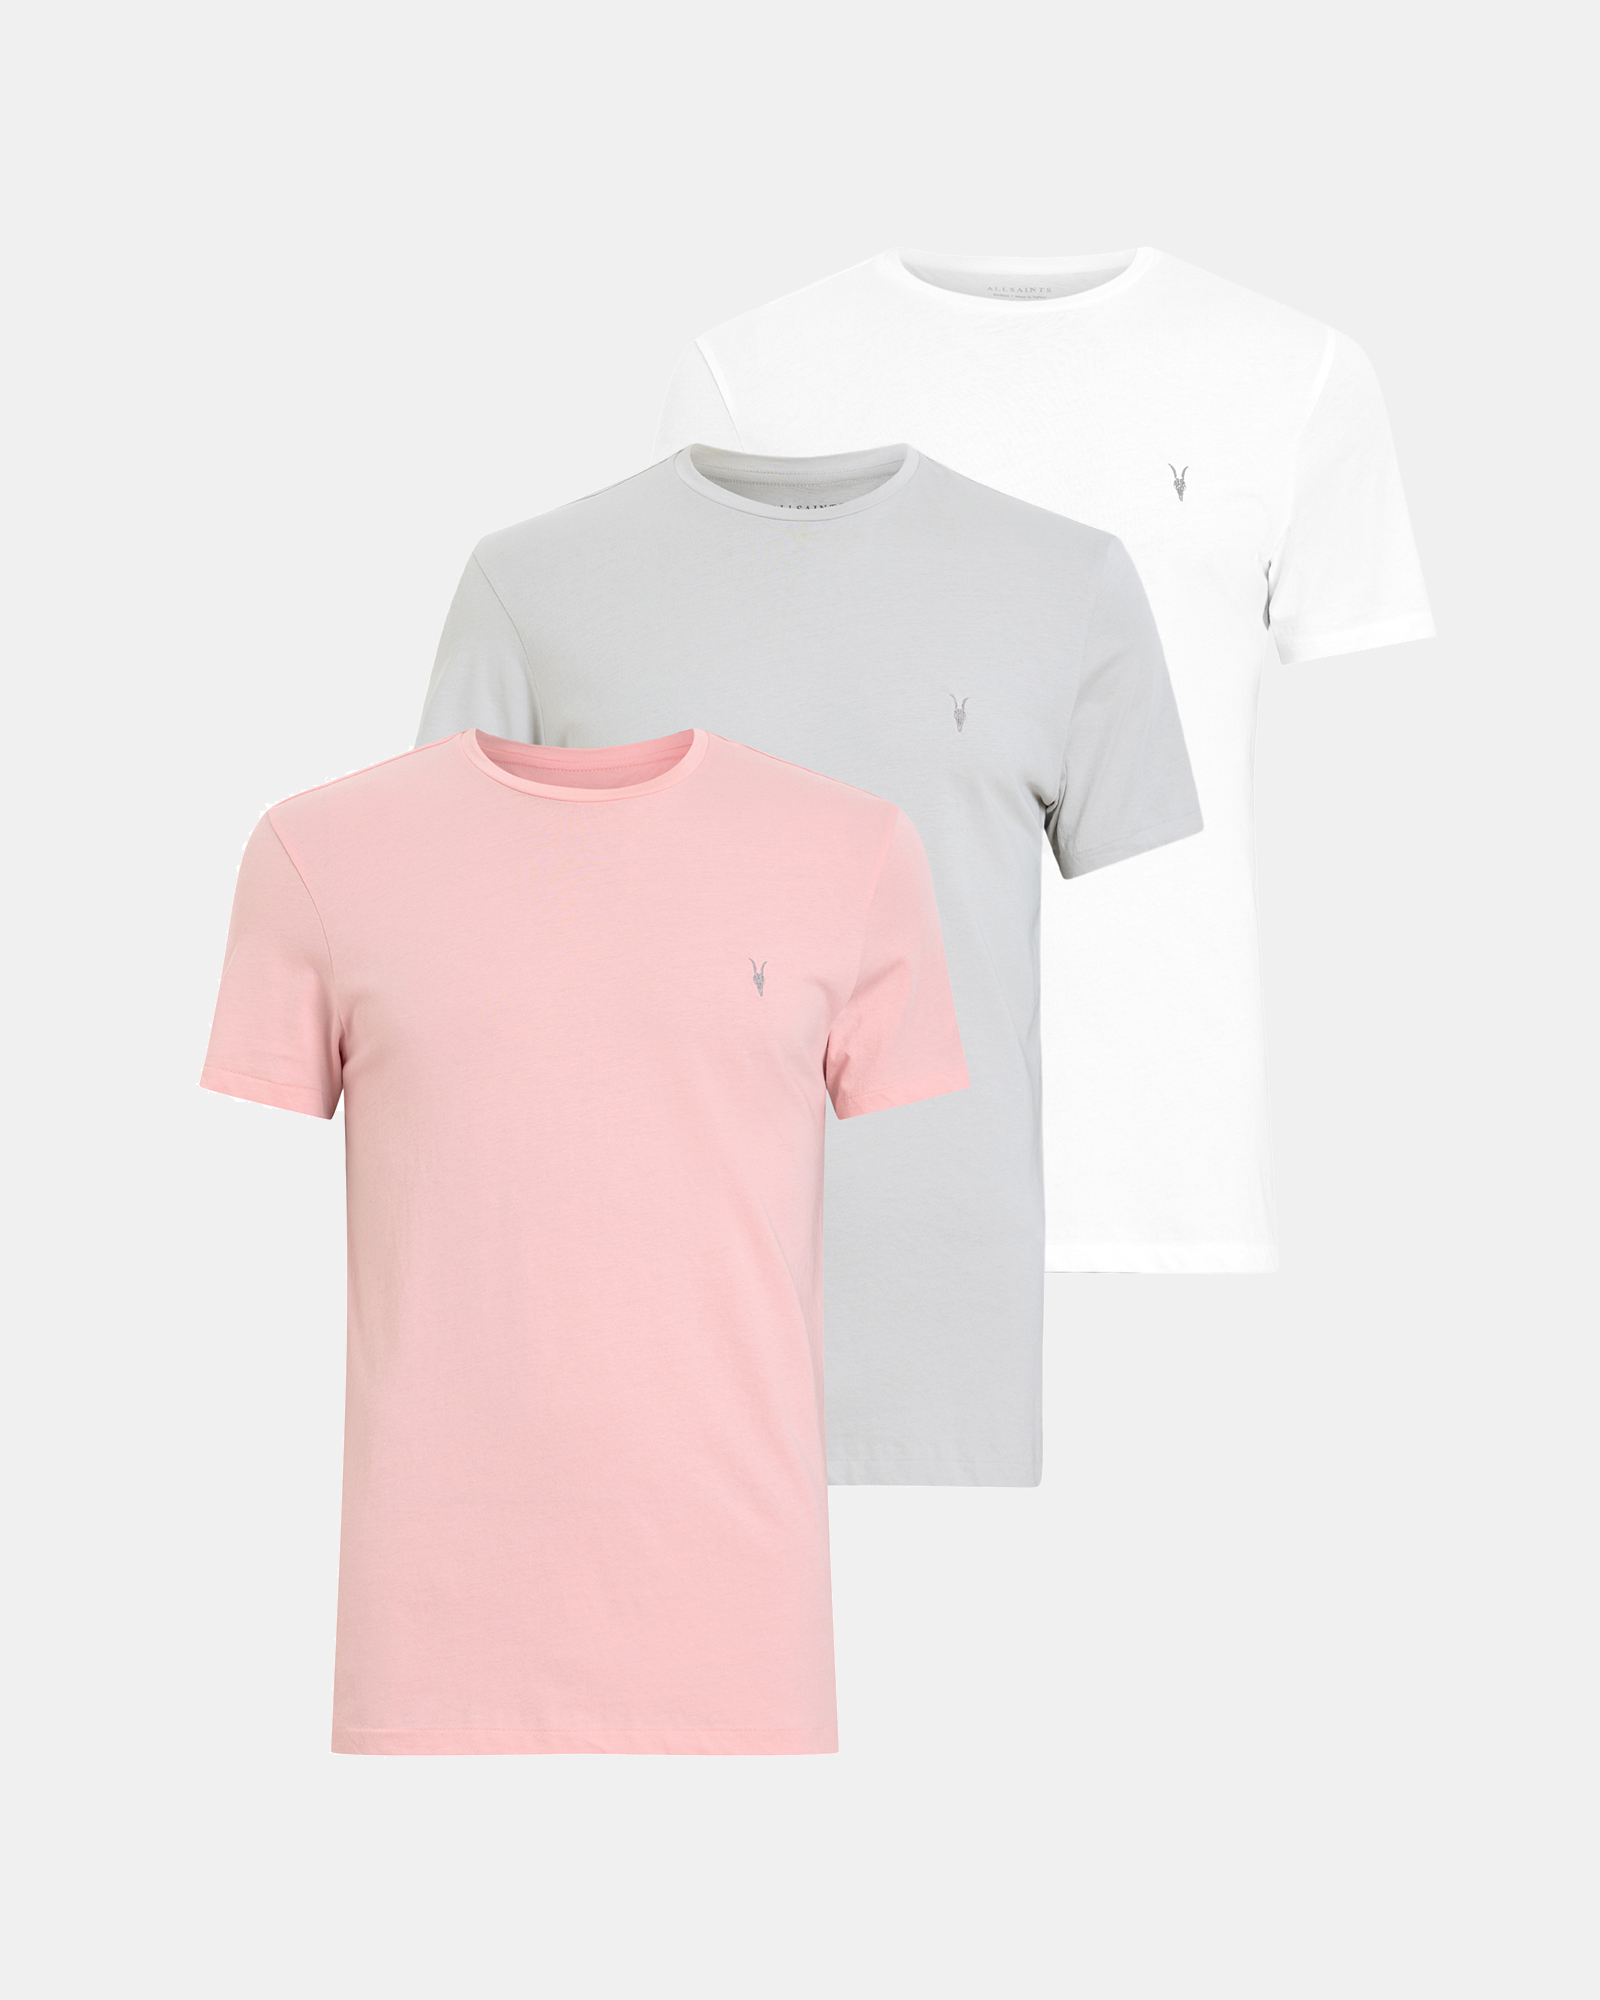 AllSaints Tonic Crew Ramskull T-Shirts 3 Pack,, WHITE/PINK/GREY